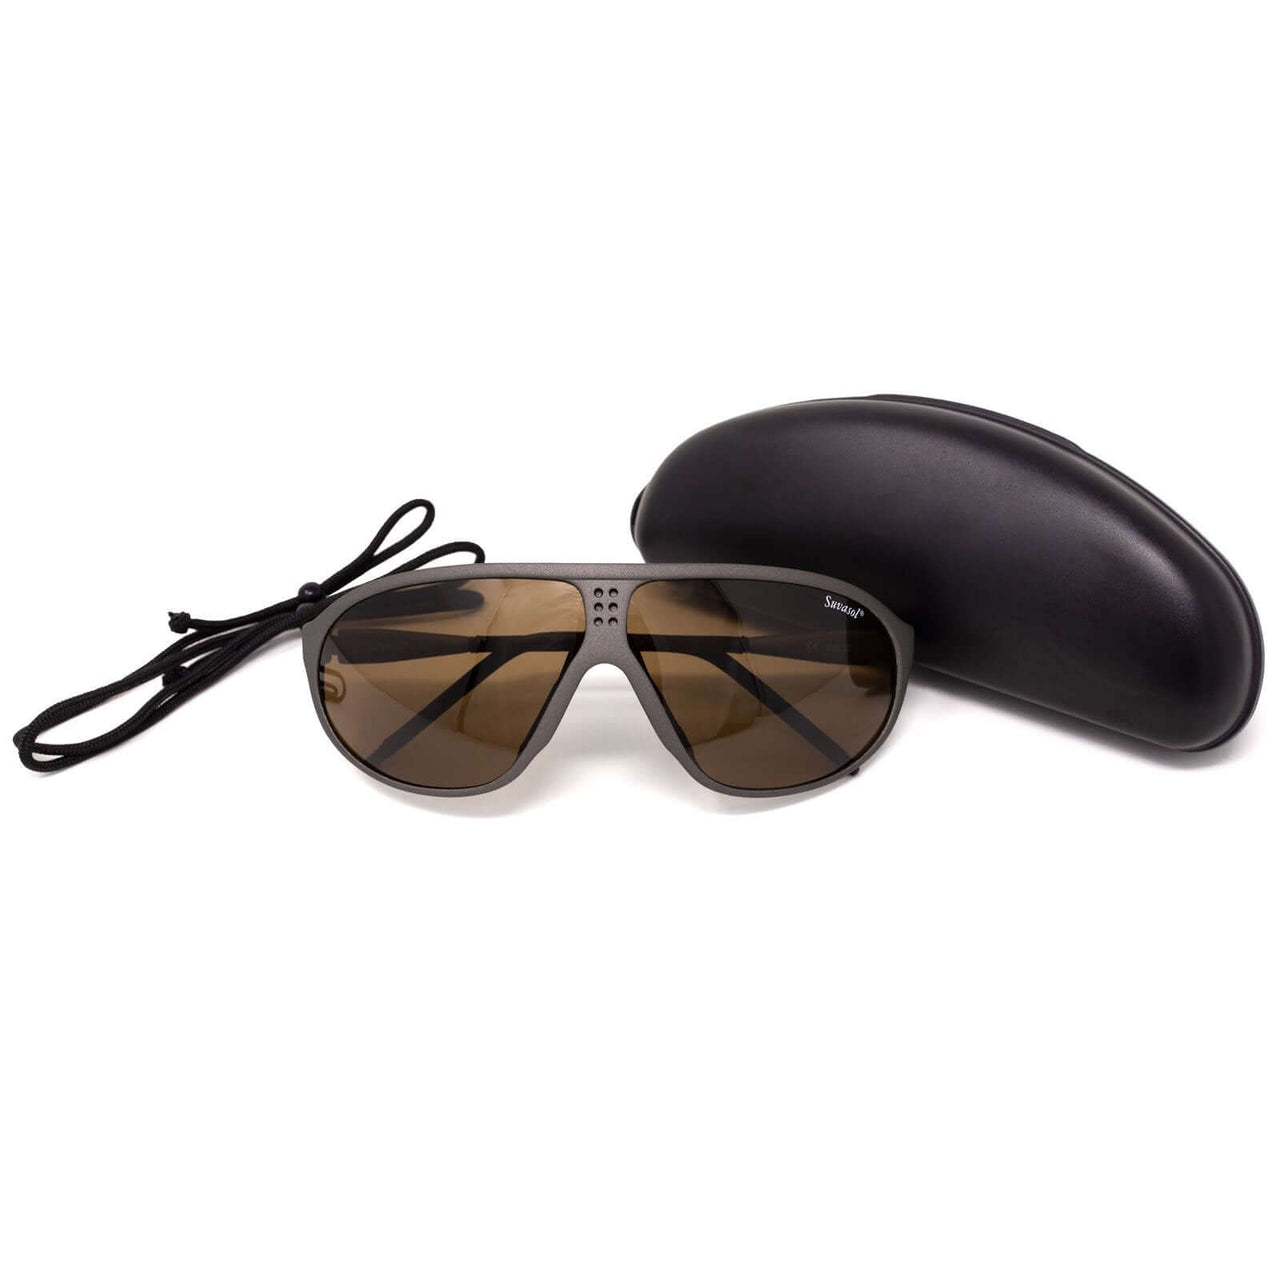 Authentic Suvasol Swiss Army Sunglasses (Used)